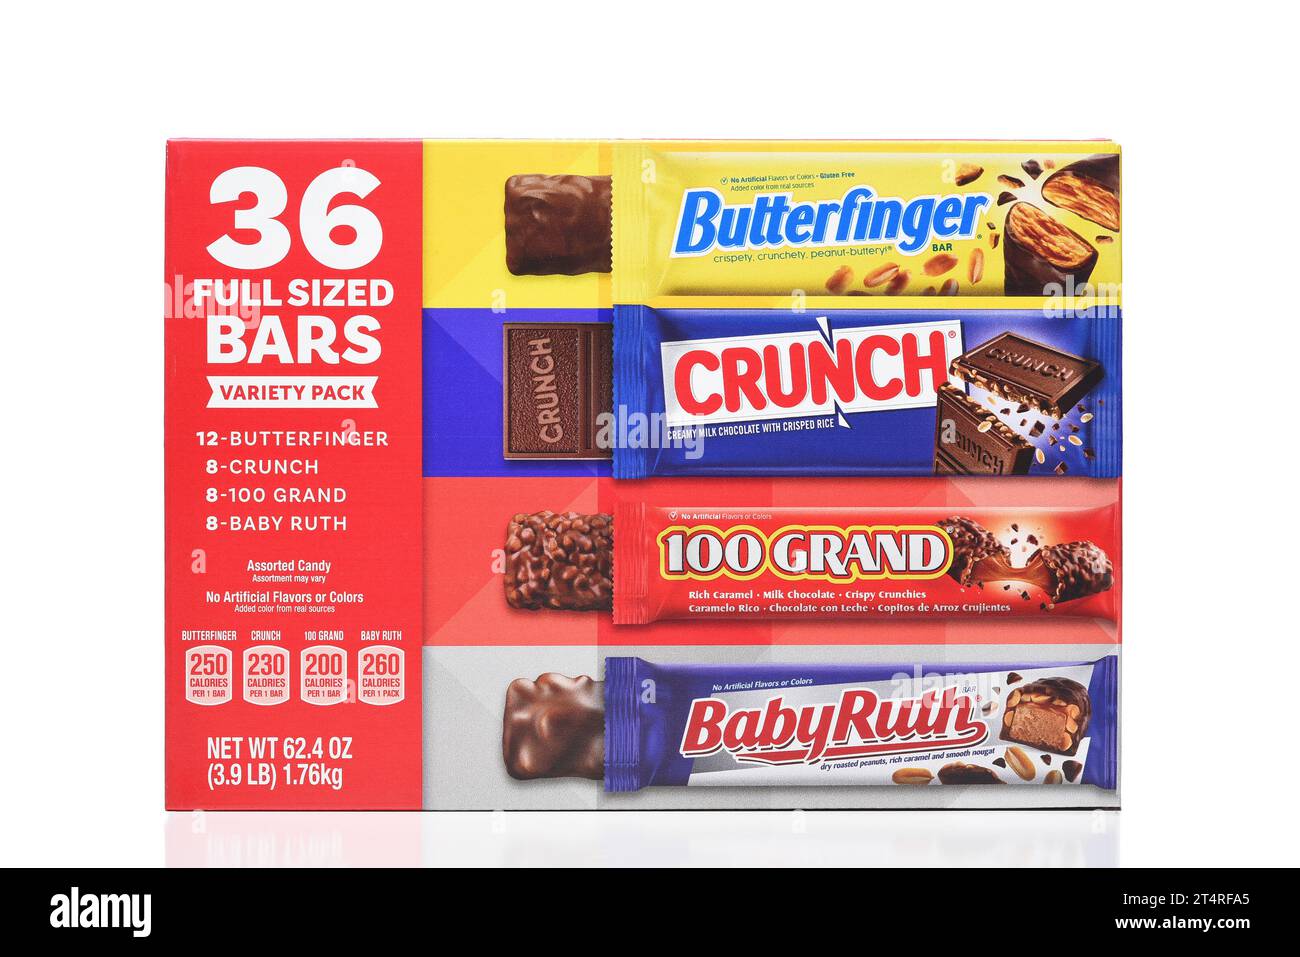 Nestle Crunch Candy Bars: 36-Piece Box